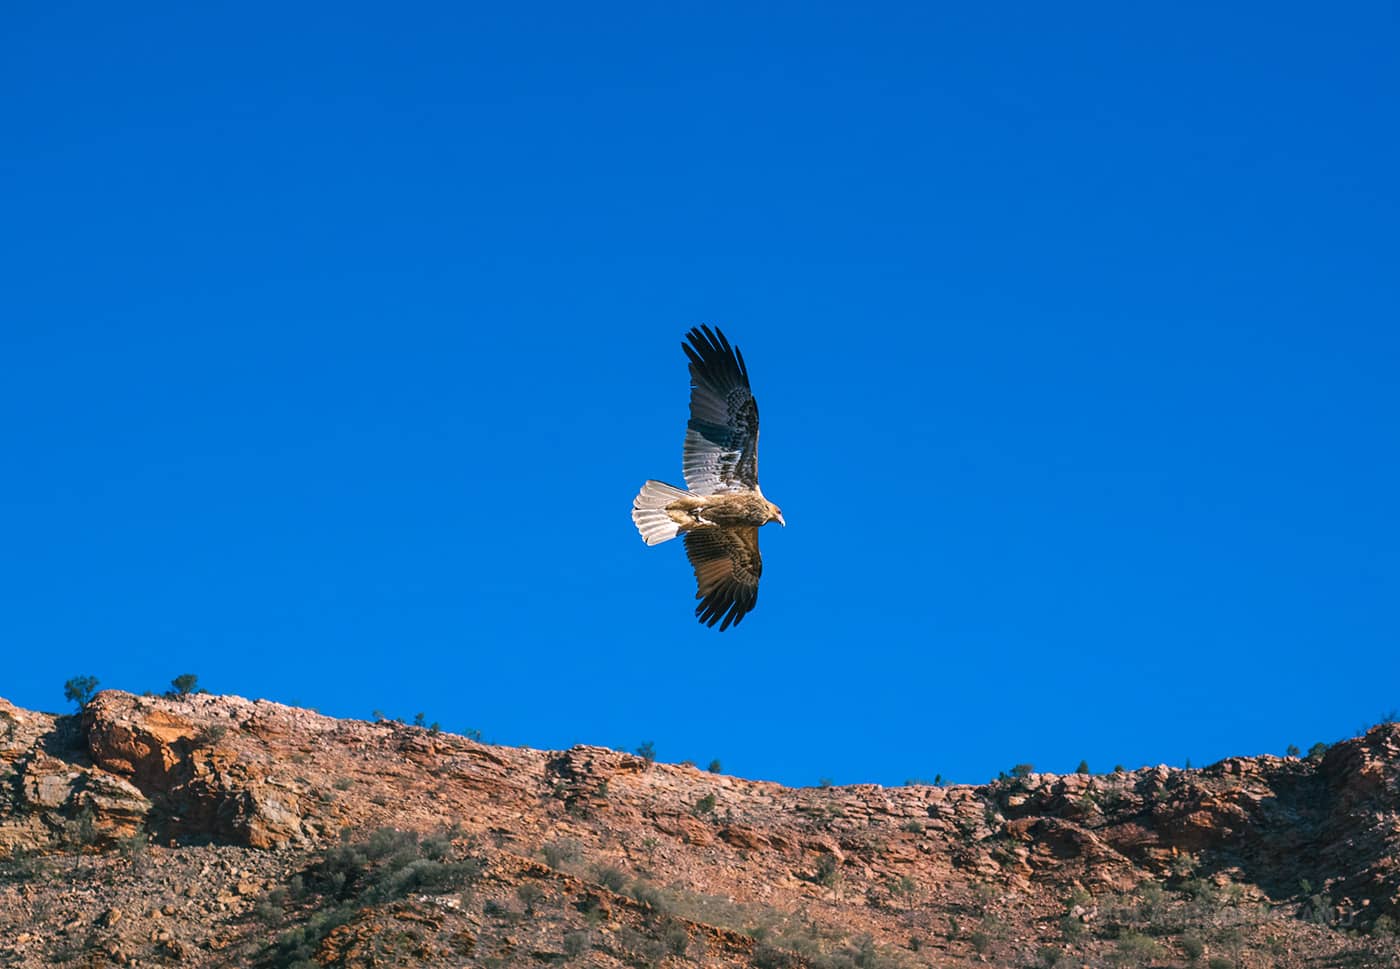 NT Australia - Eagle soaring in the sky